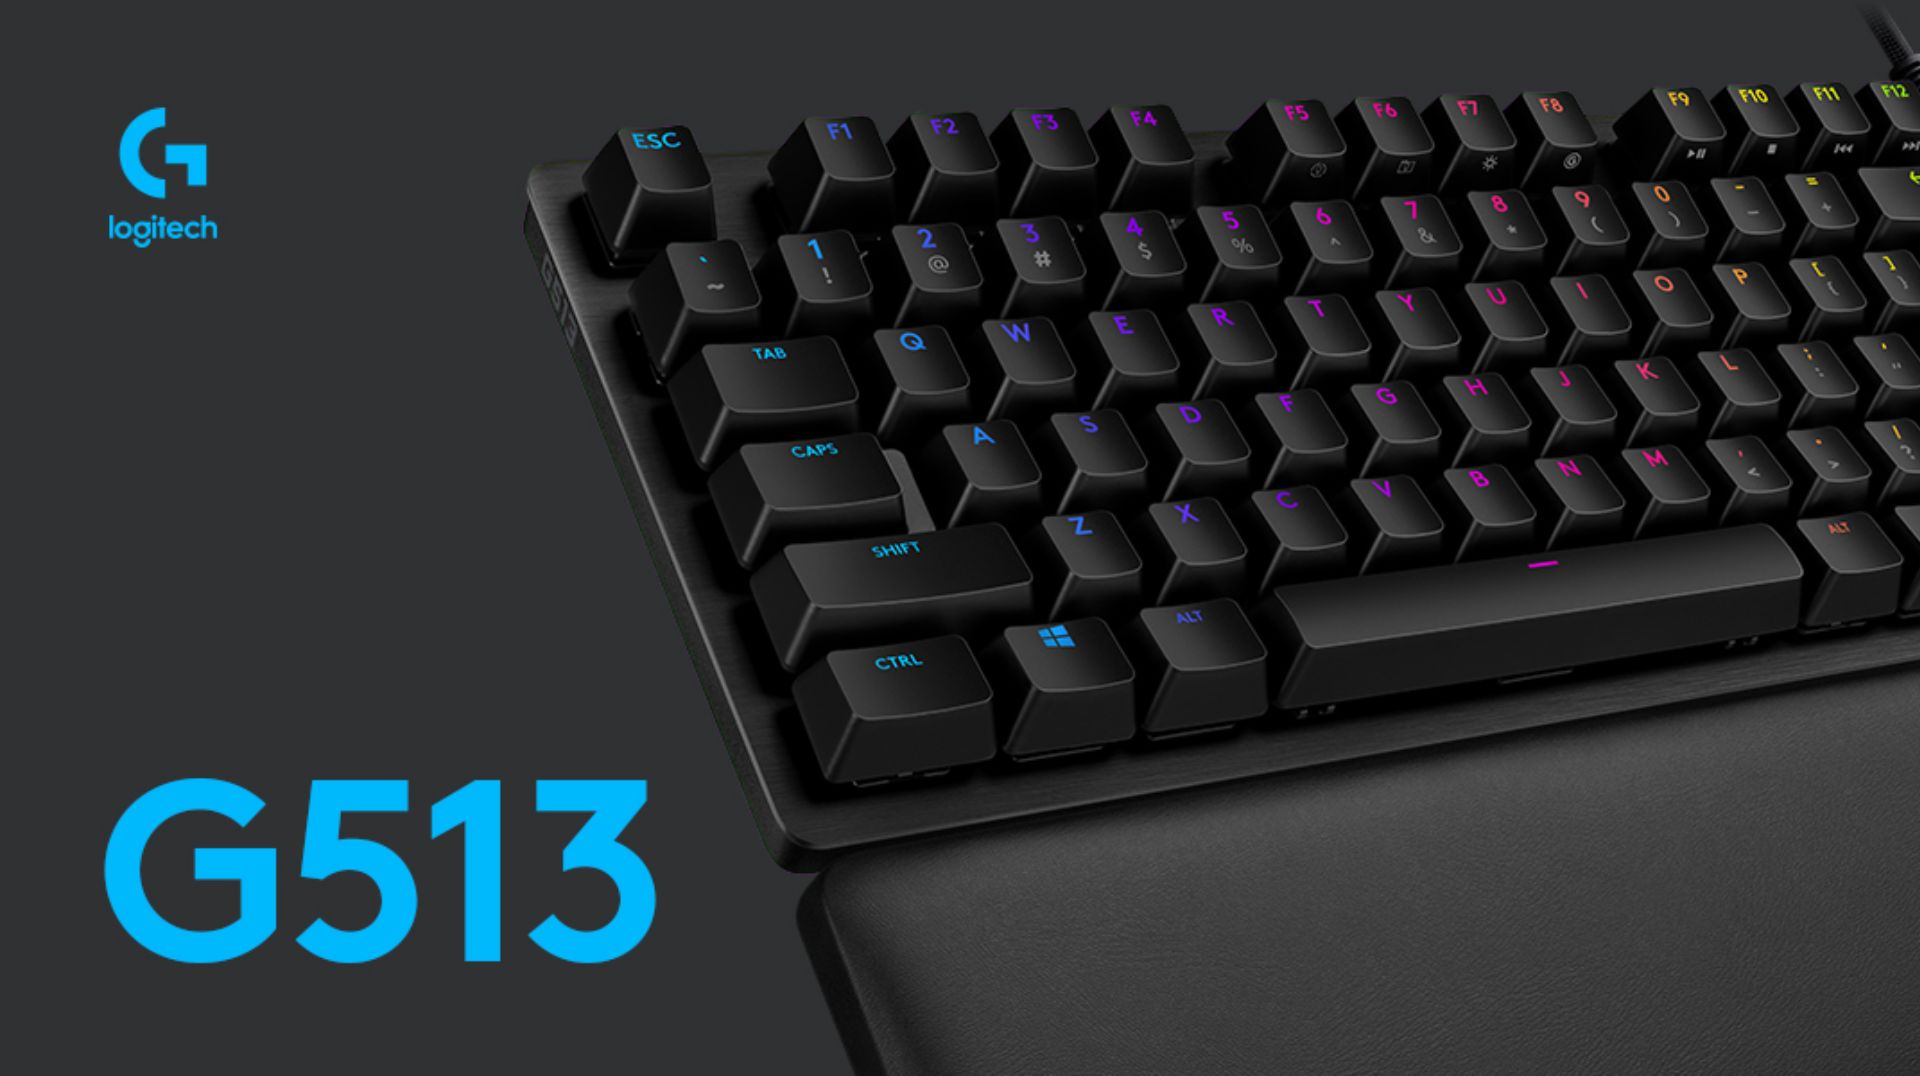 Logitech G513 Keyboard Gaming Wired